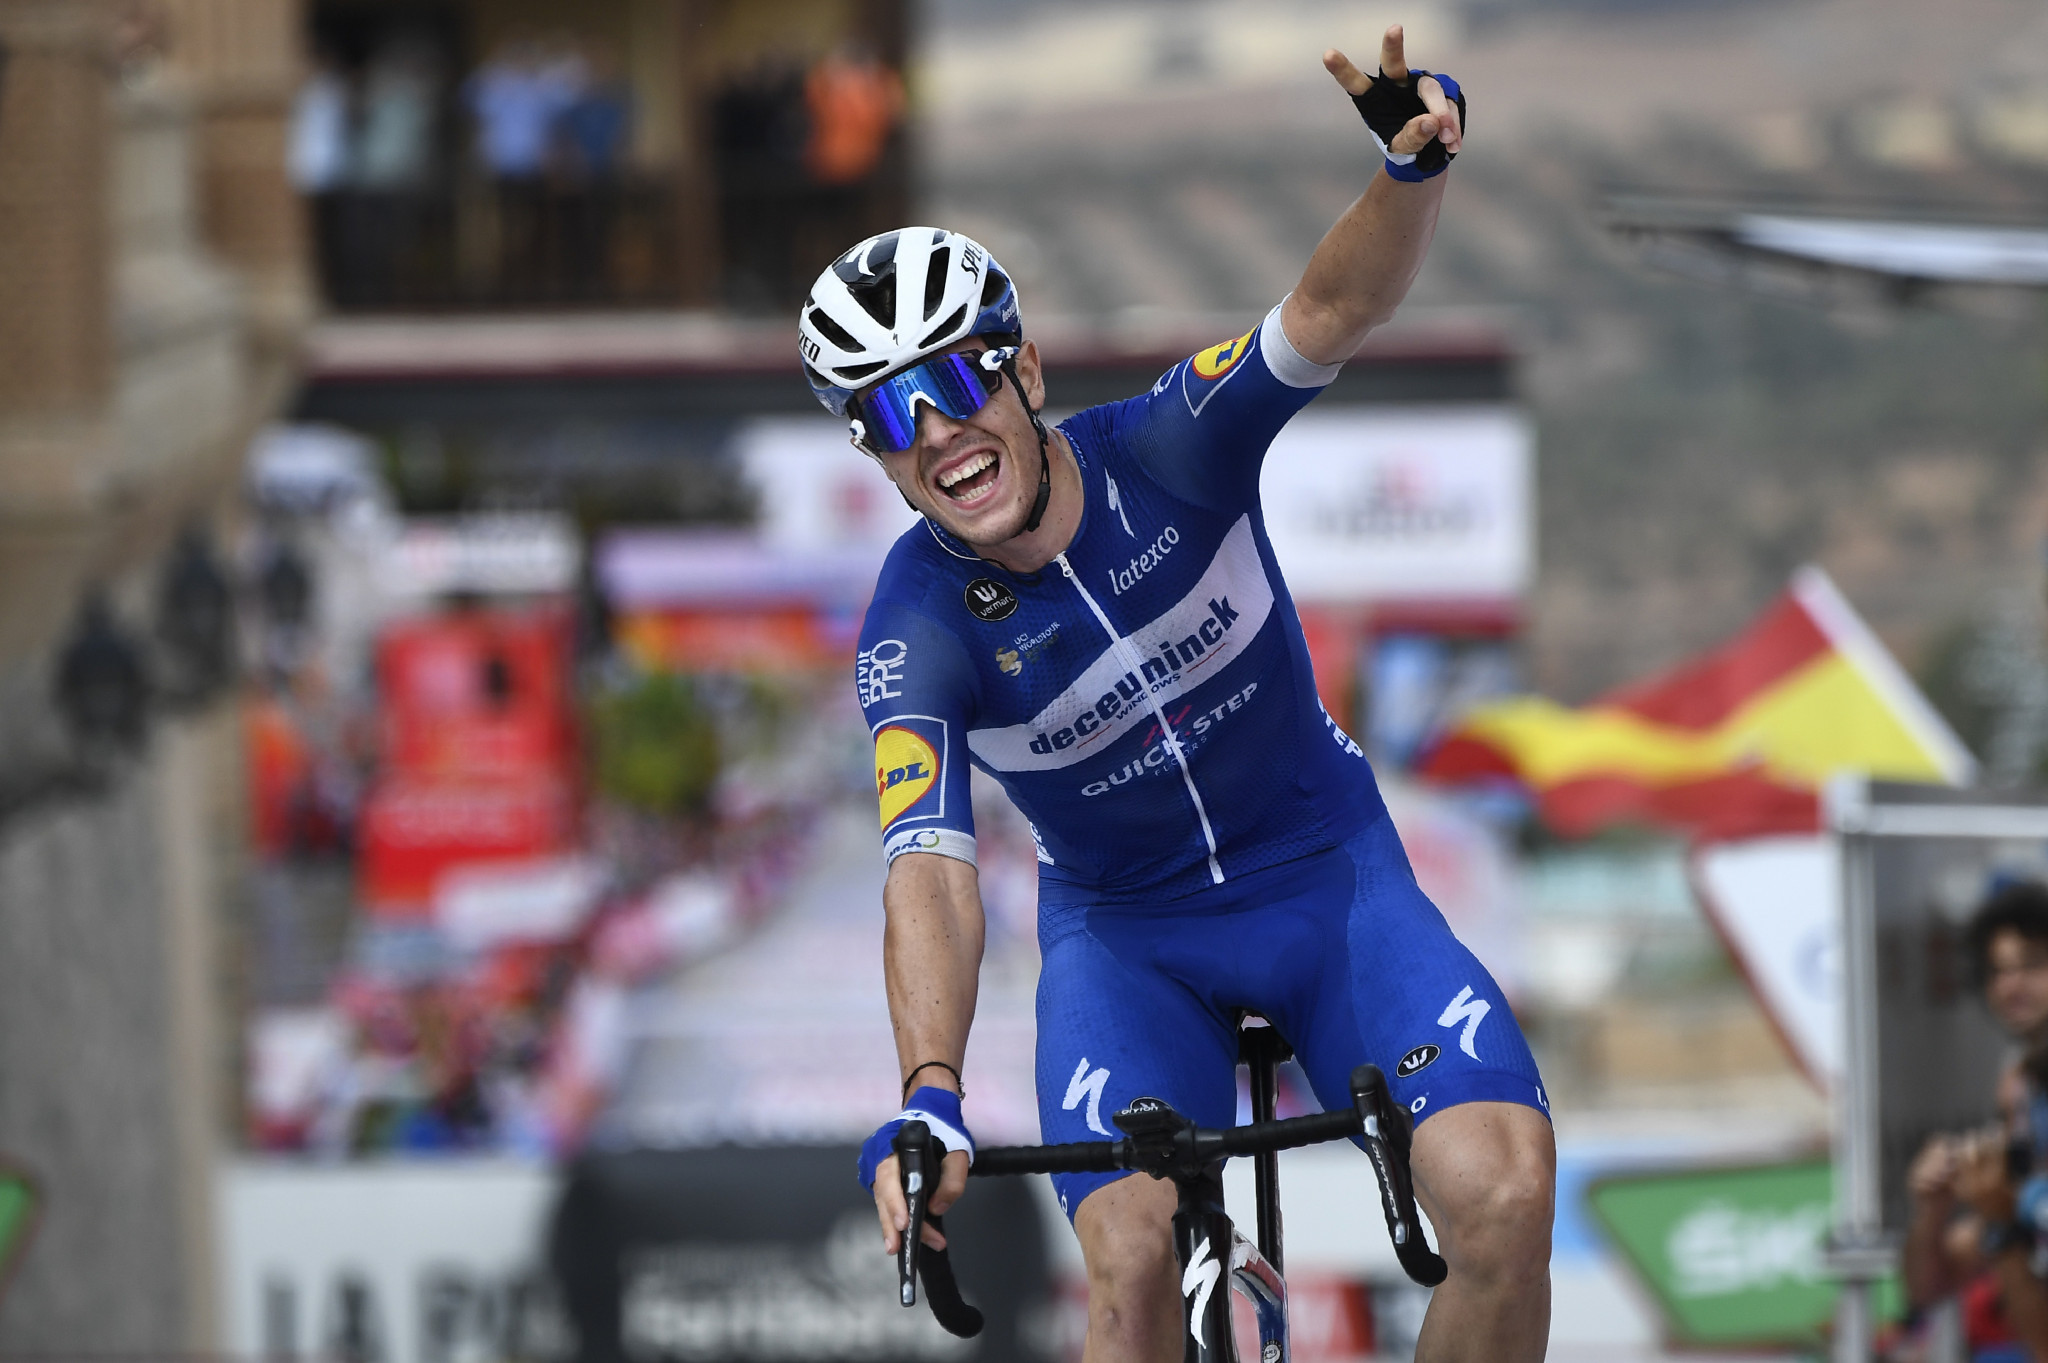 Cavagna wins controversial 19th stage at Vuelta a España